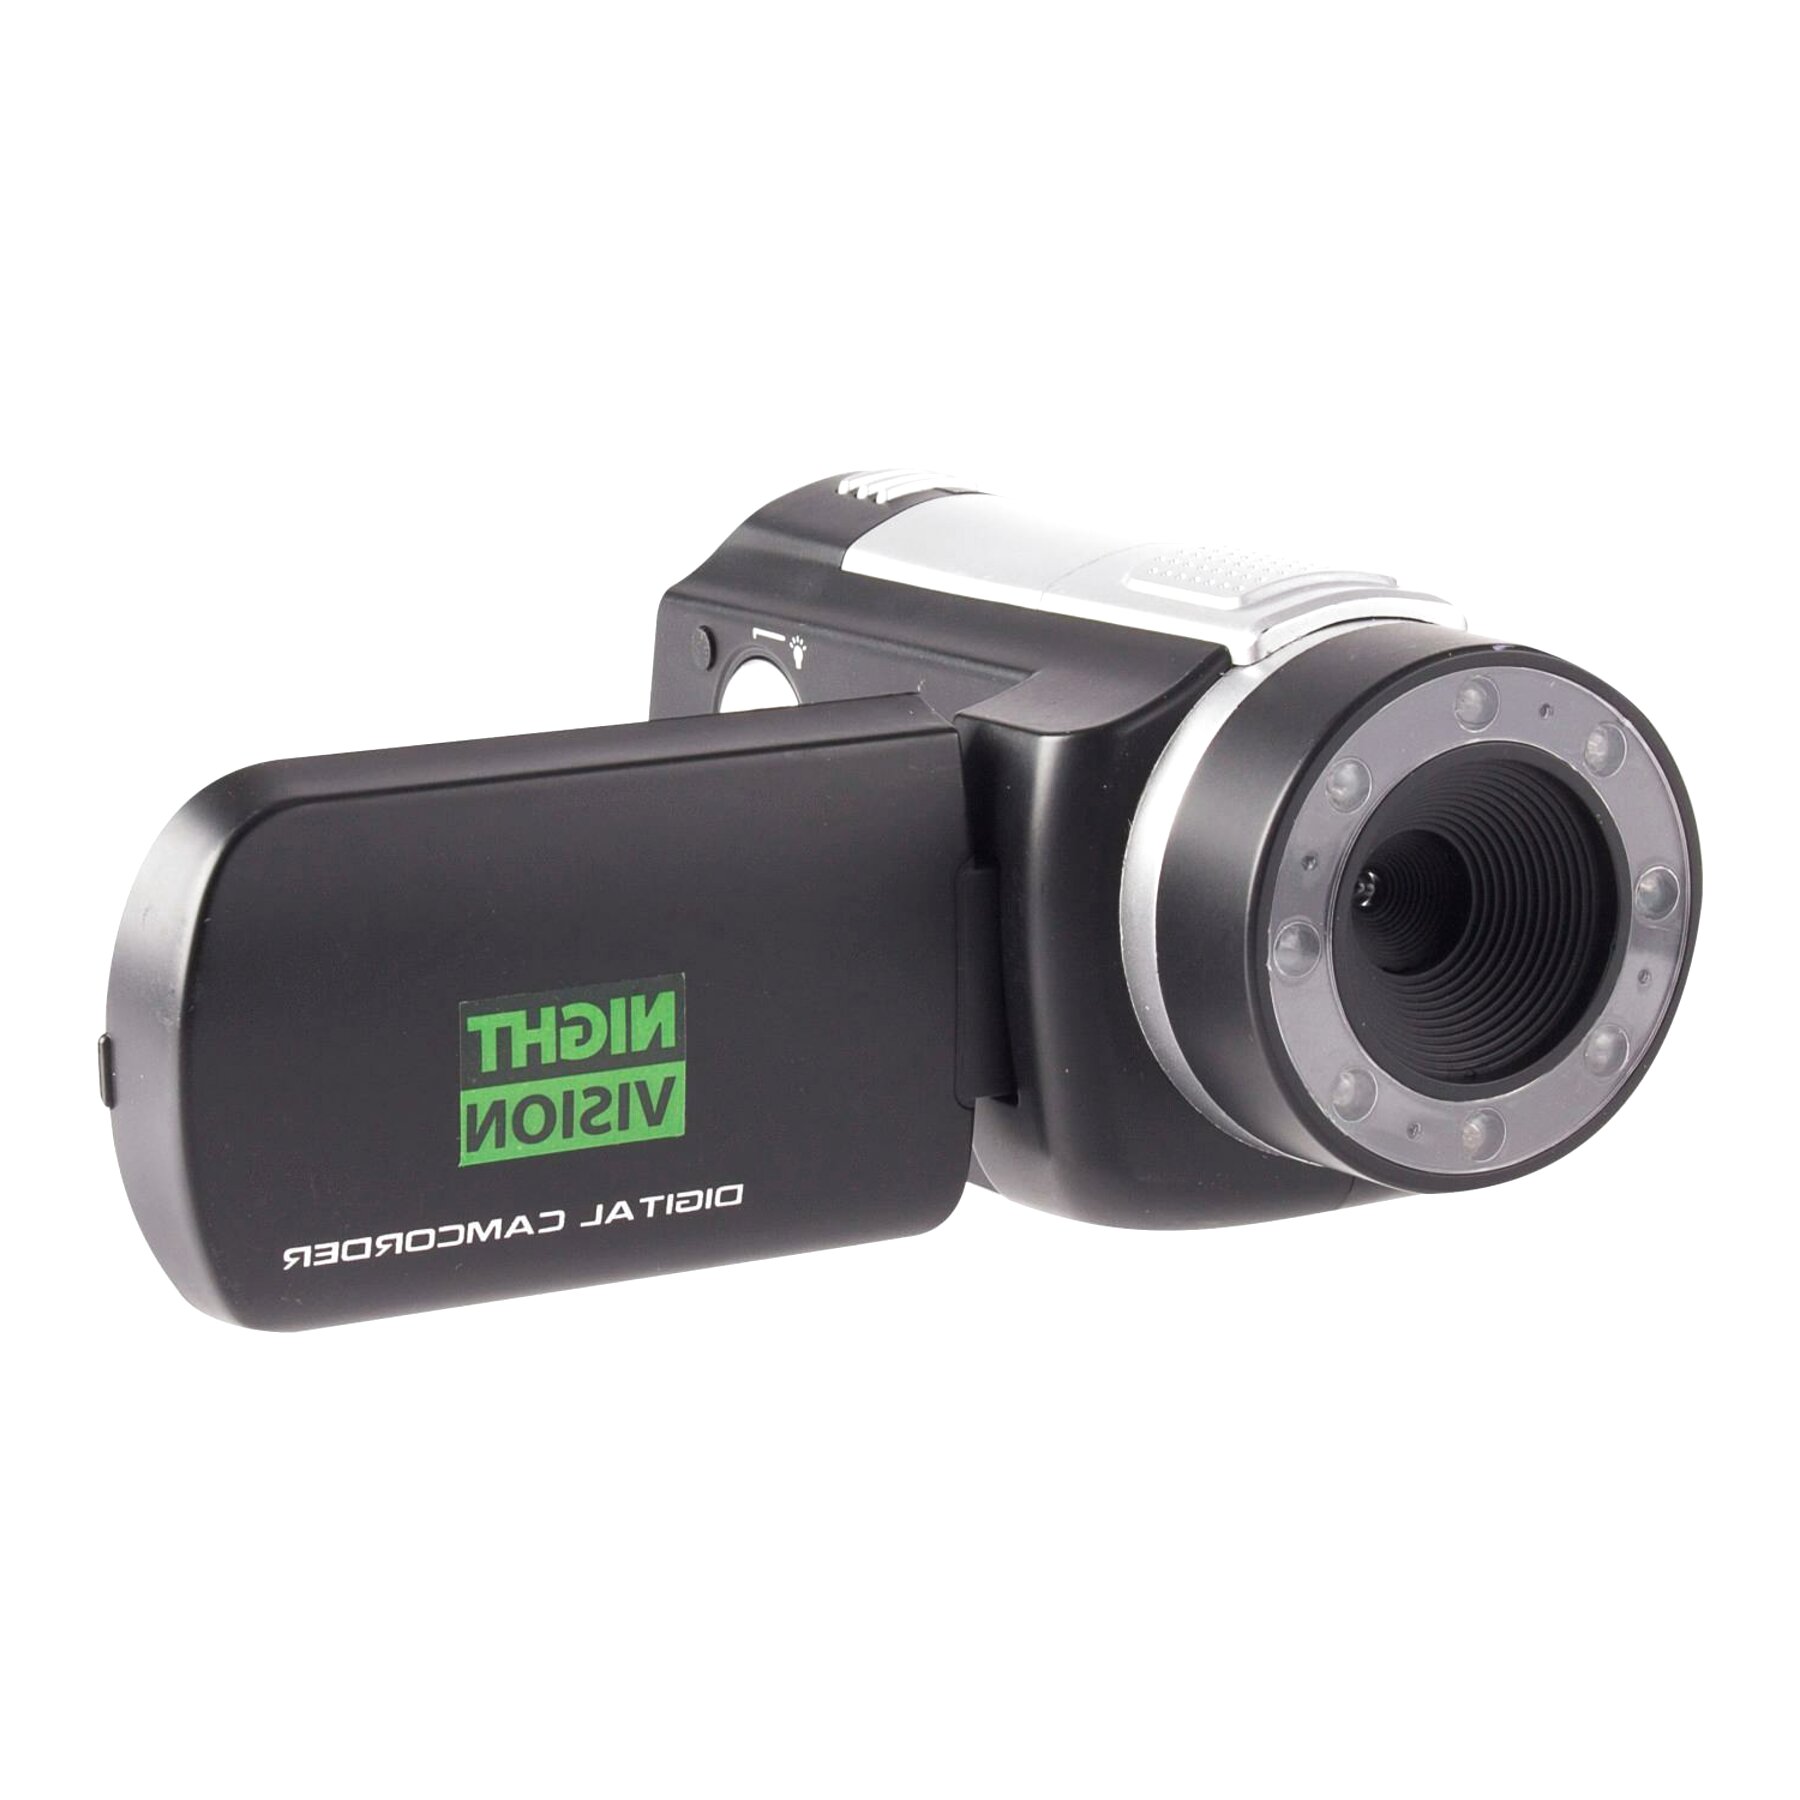 Night Vision Digital Camcorder for sale in UK